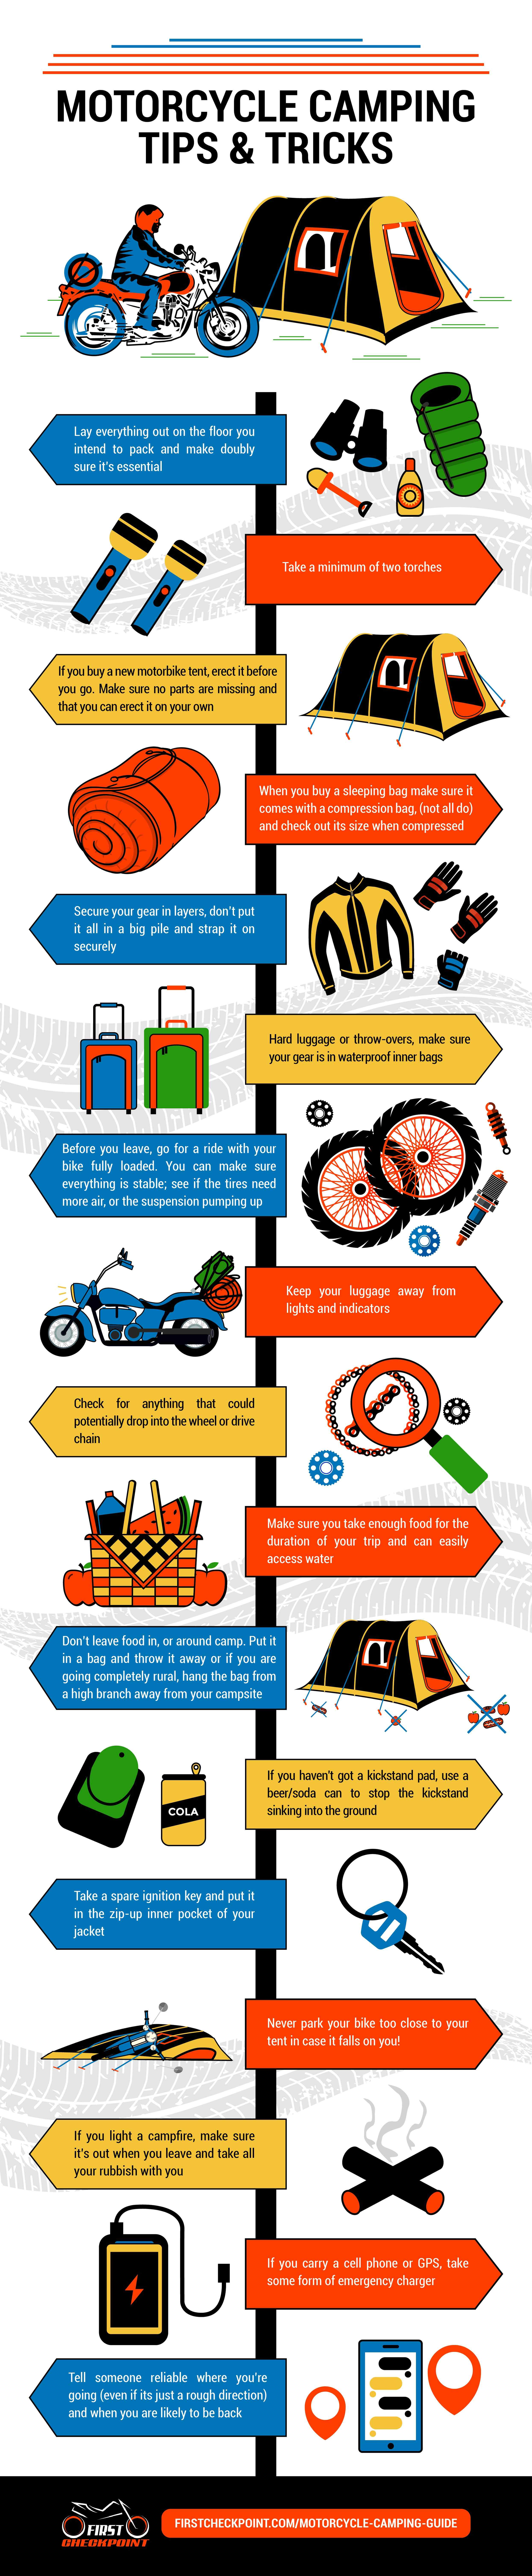 Motorcycle Camping Tips